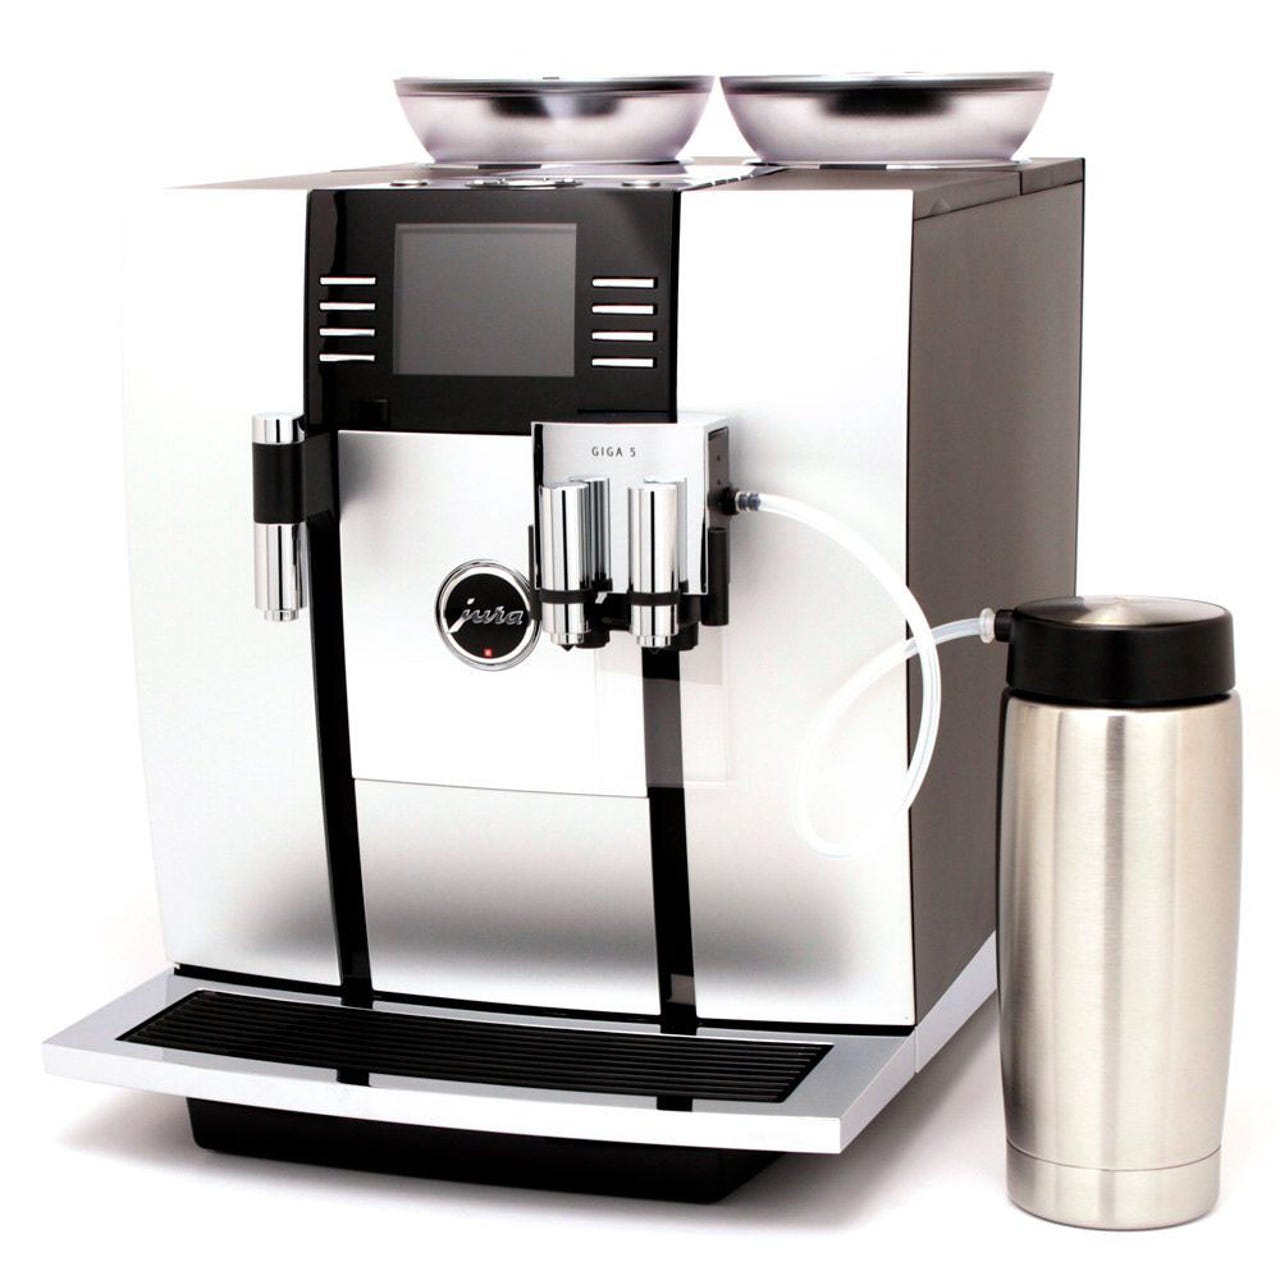 zdnet-luxury-tech-jura-giga-5-coffee-maker.jpg